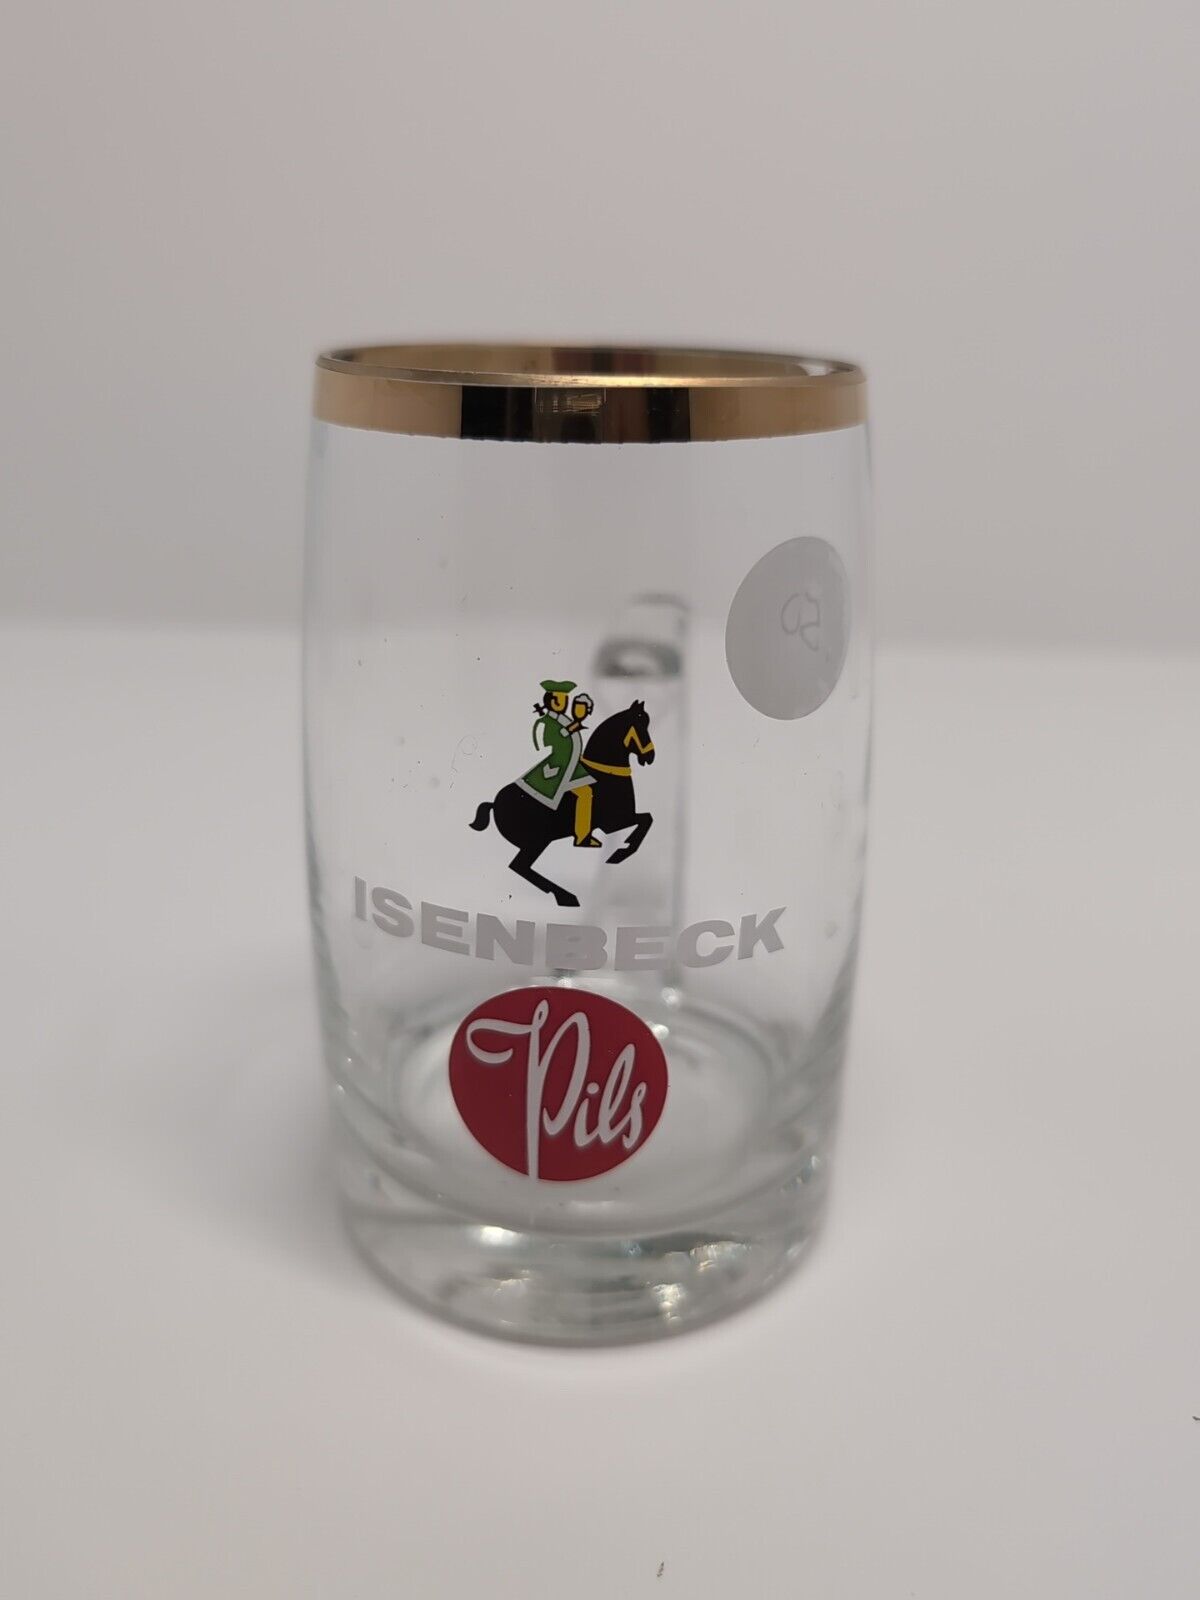 Vintage German Isenbeck Pils Beer Glass